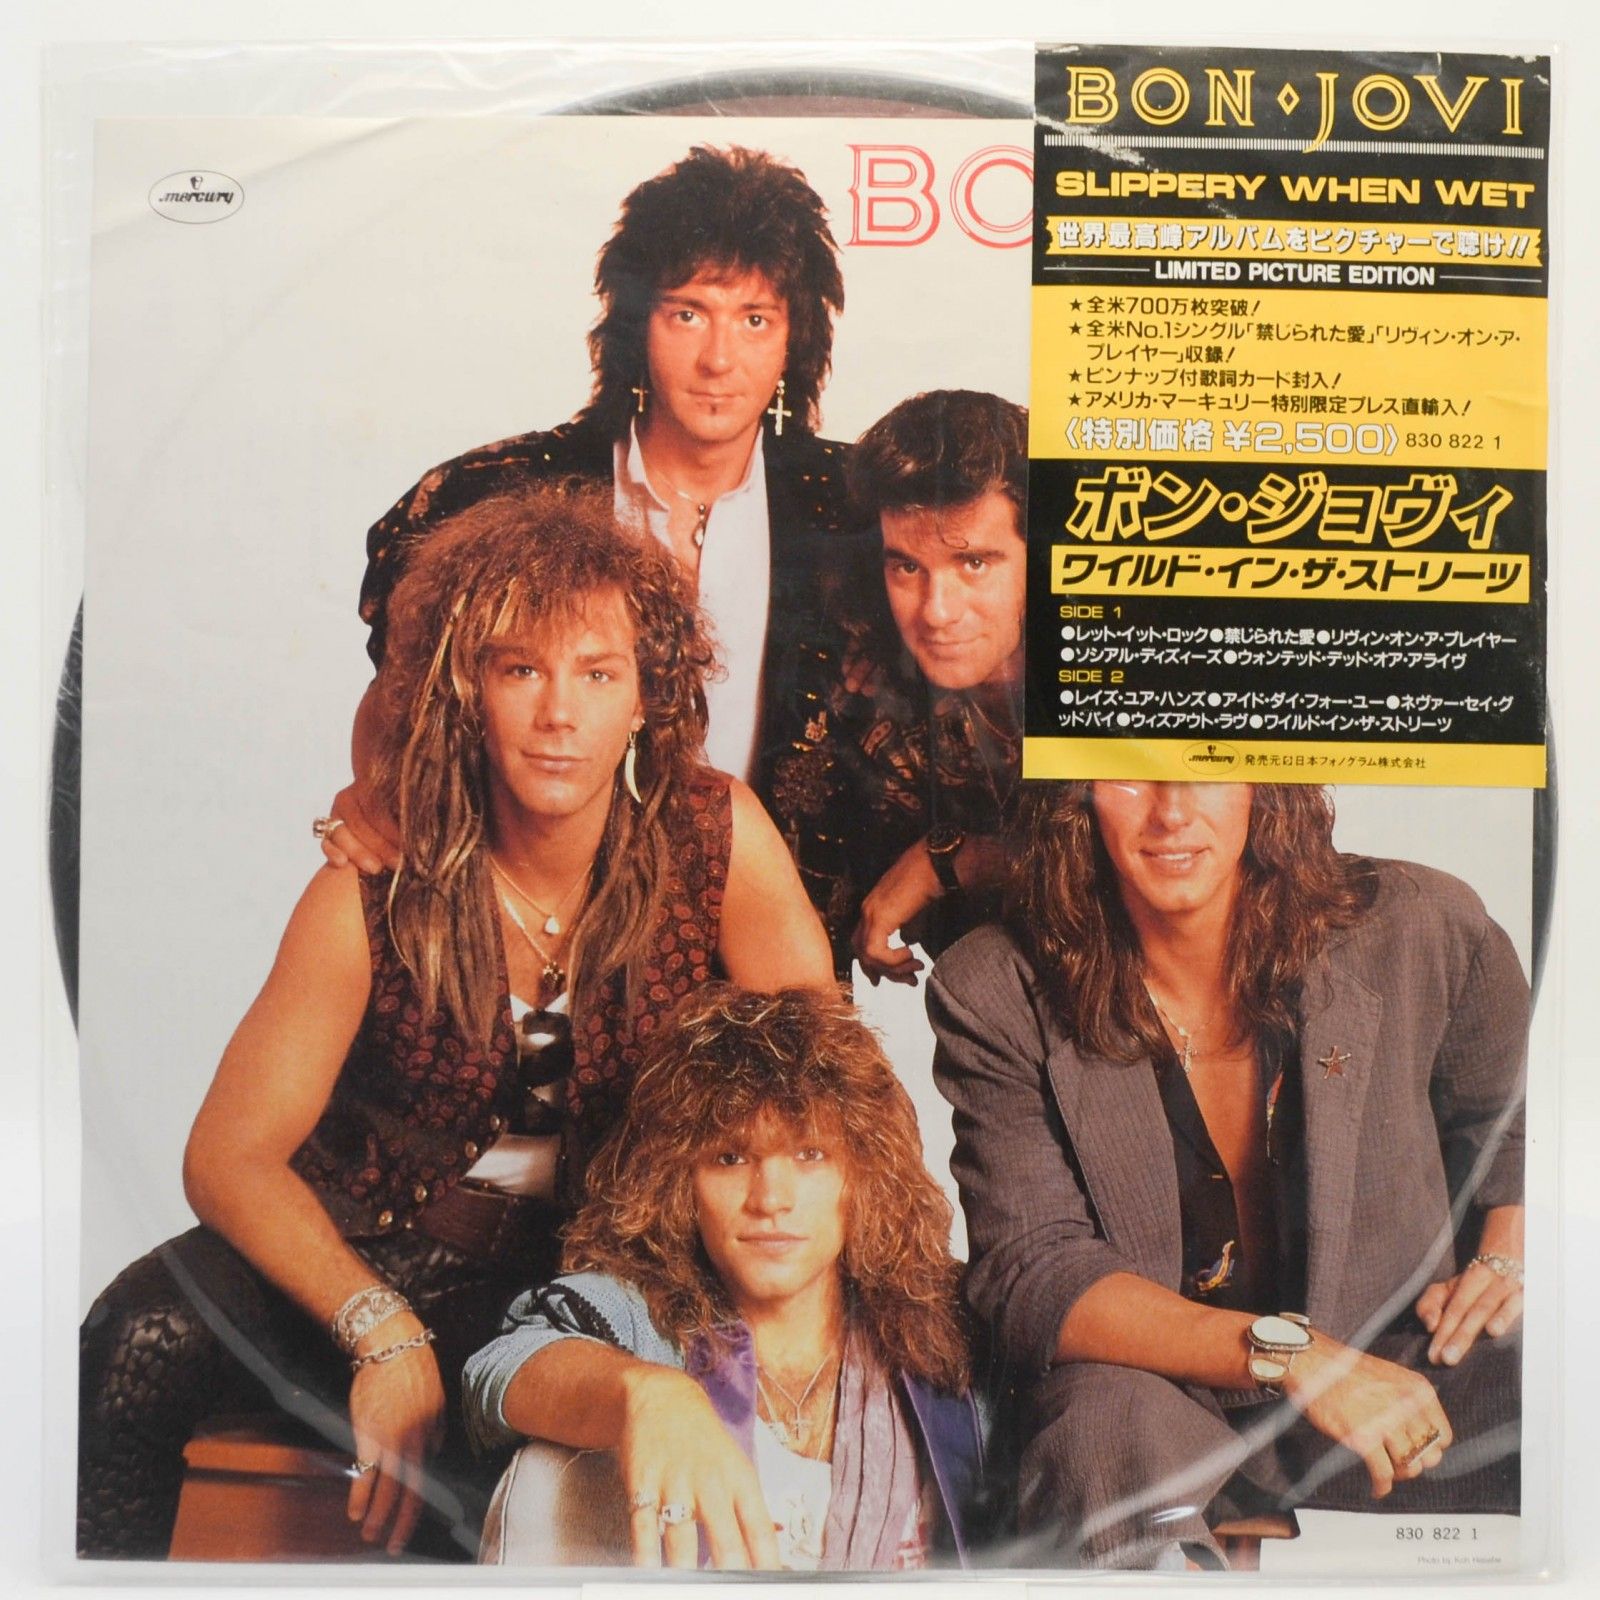 Bon Jovi — Slippery When Wet, 1986